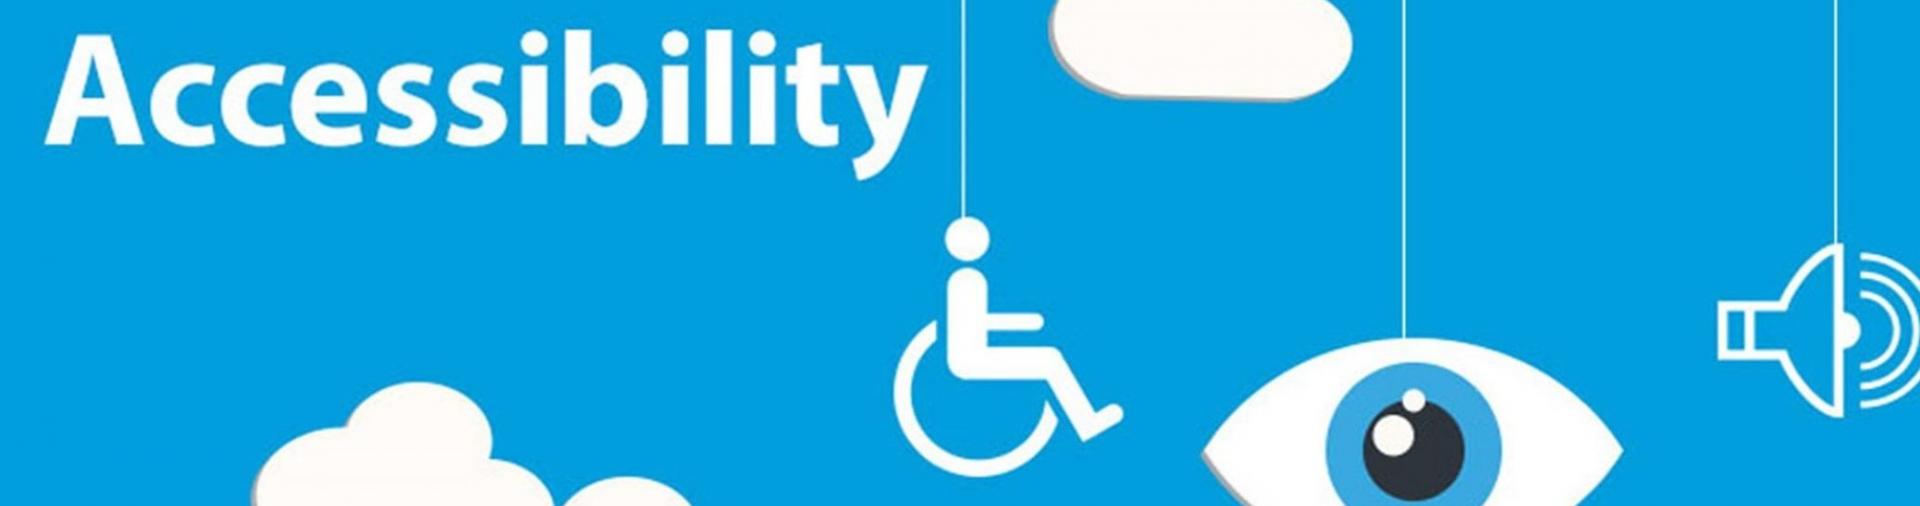 Accessibility photo